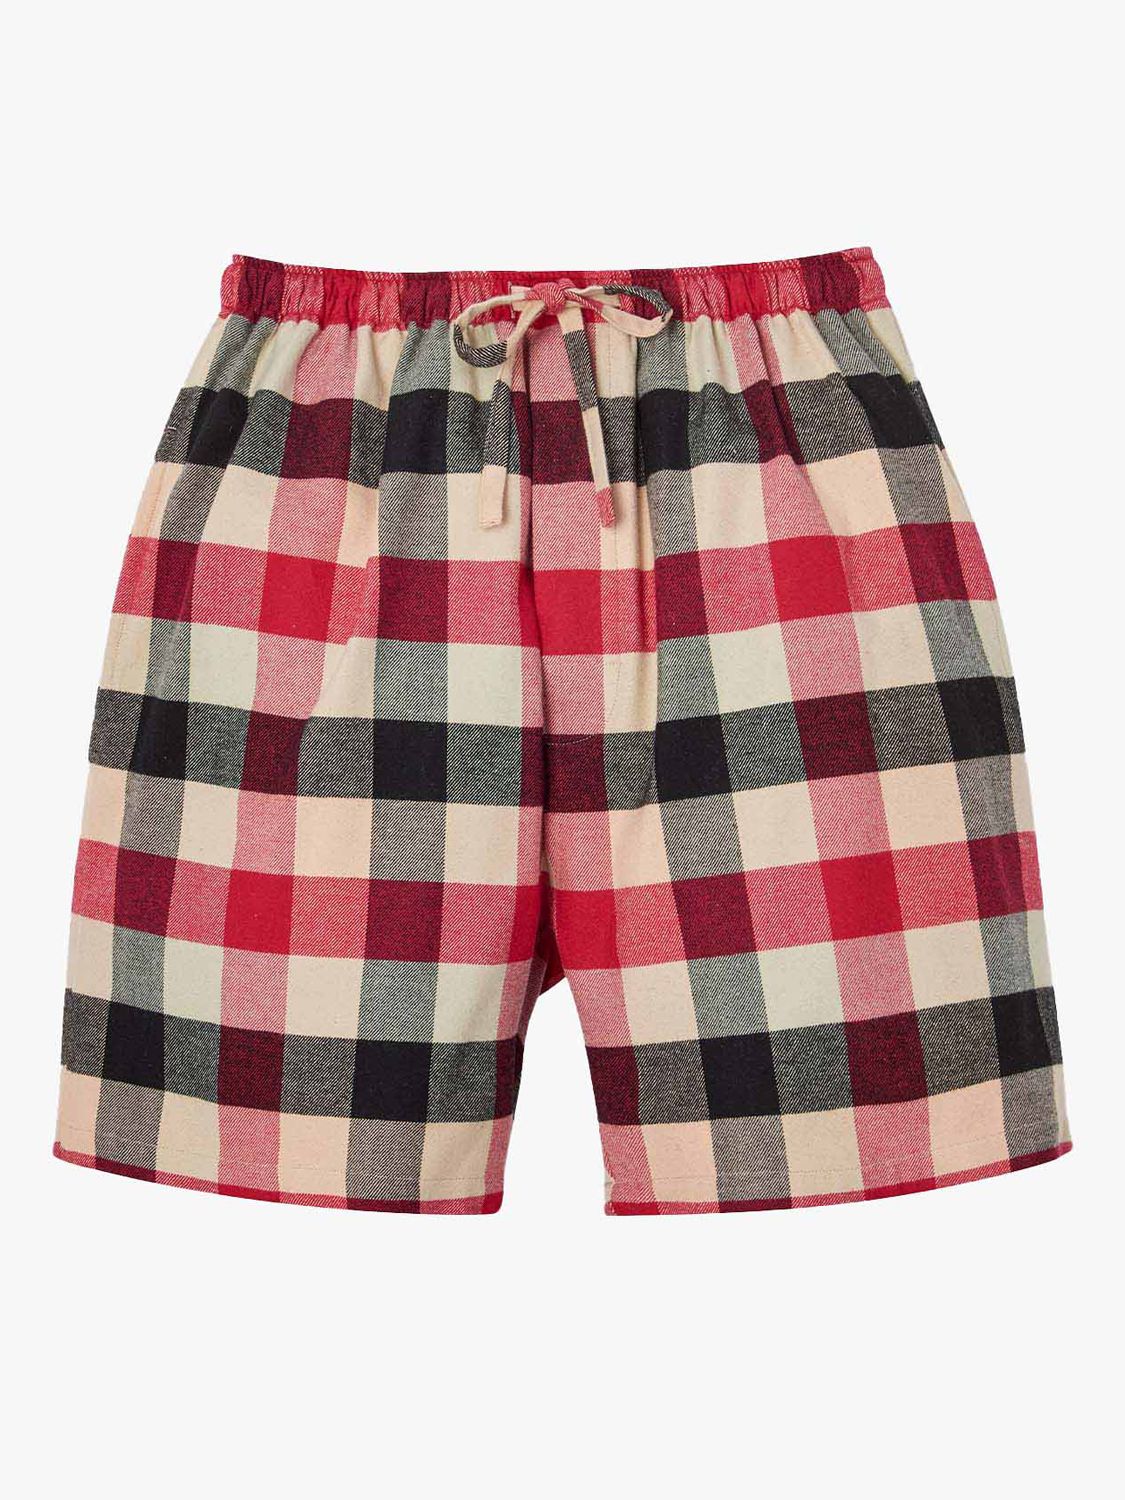 Buy British Boxers Brushed Cotton Shire Check Pyjama Shorts Online at johnlewis.com